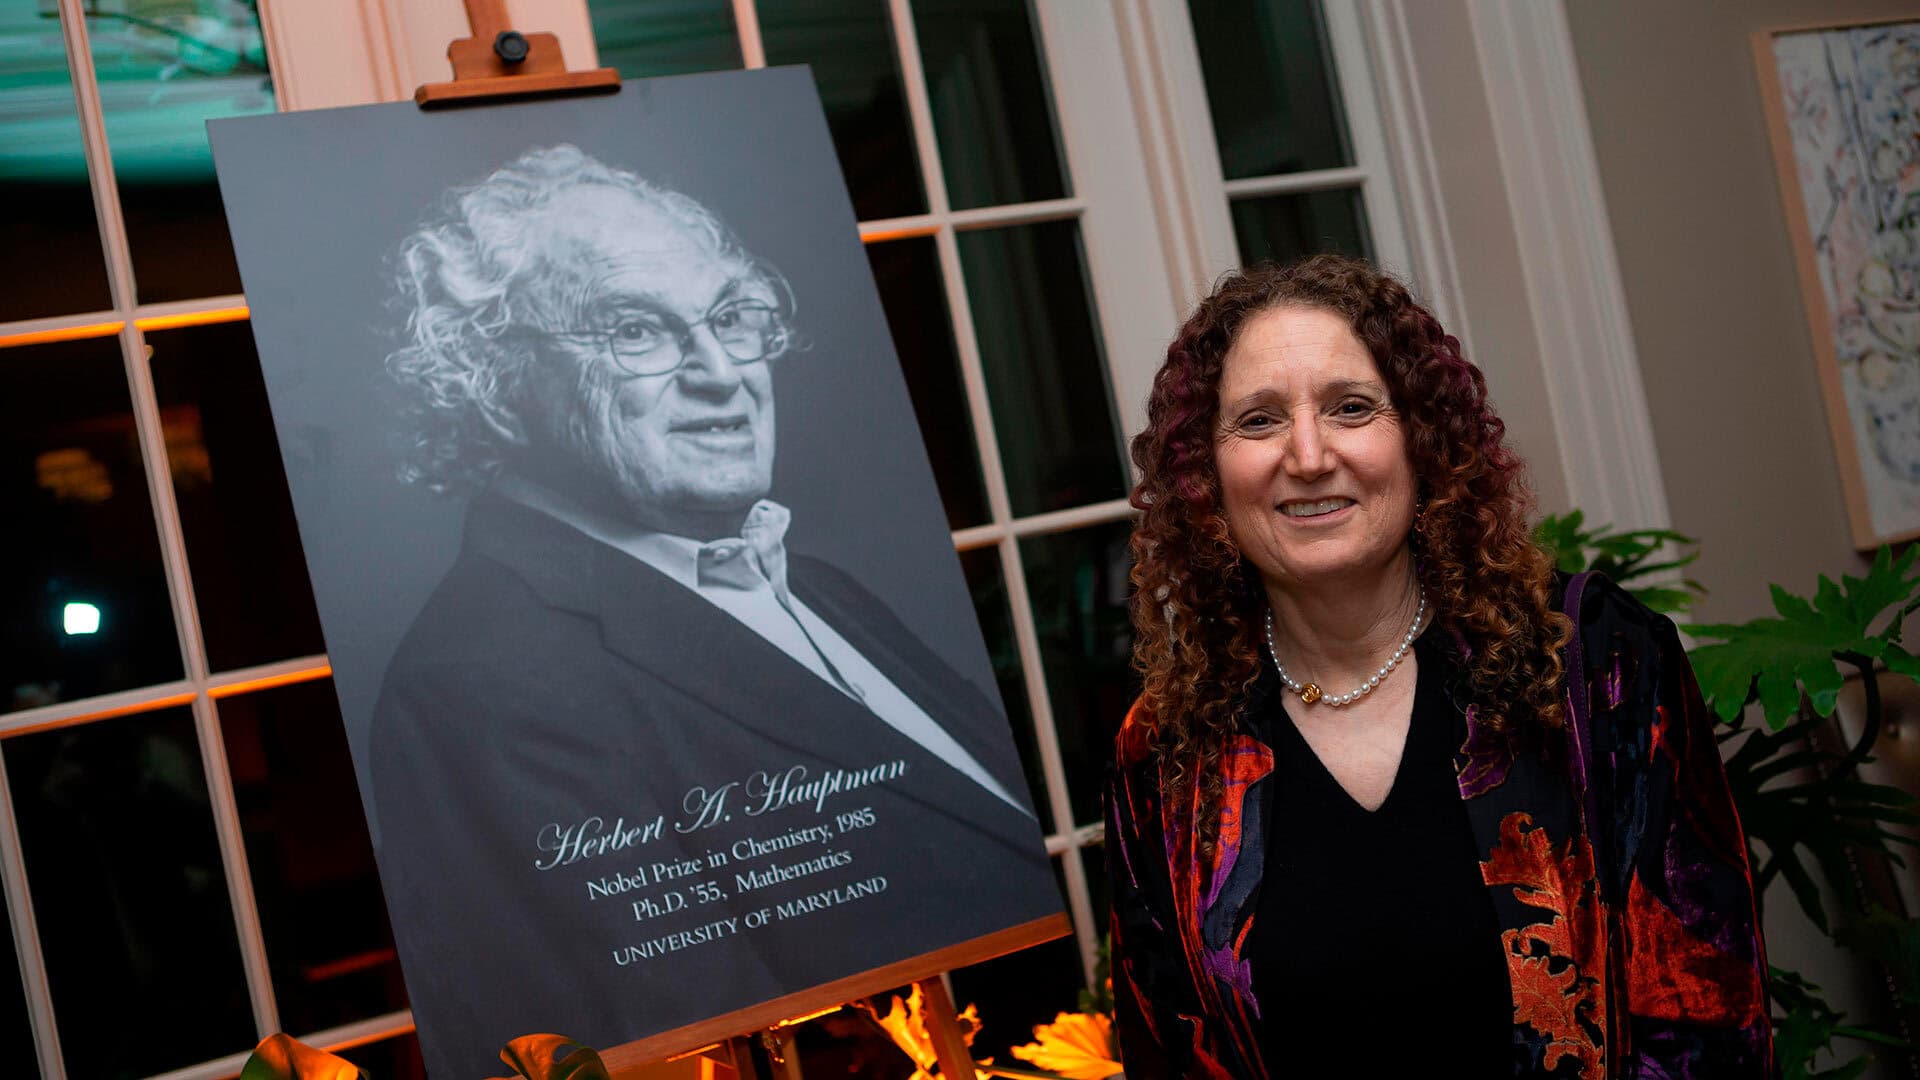 Carol Fullerton M.A. ’75, Ph.D. ’87 will establish the Herbert A. Hauptman Endowed Graduate Fellowship Program in the Department of Mathematics in honor of her father, Herbert A. Hauptman Ph.D. '55, who shared the 1985 Nobel Prize in chemistry.